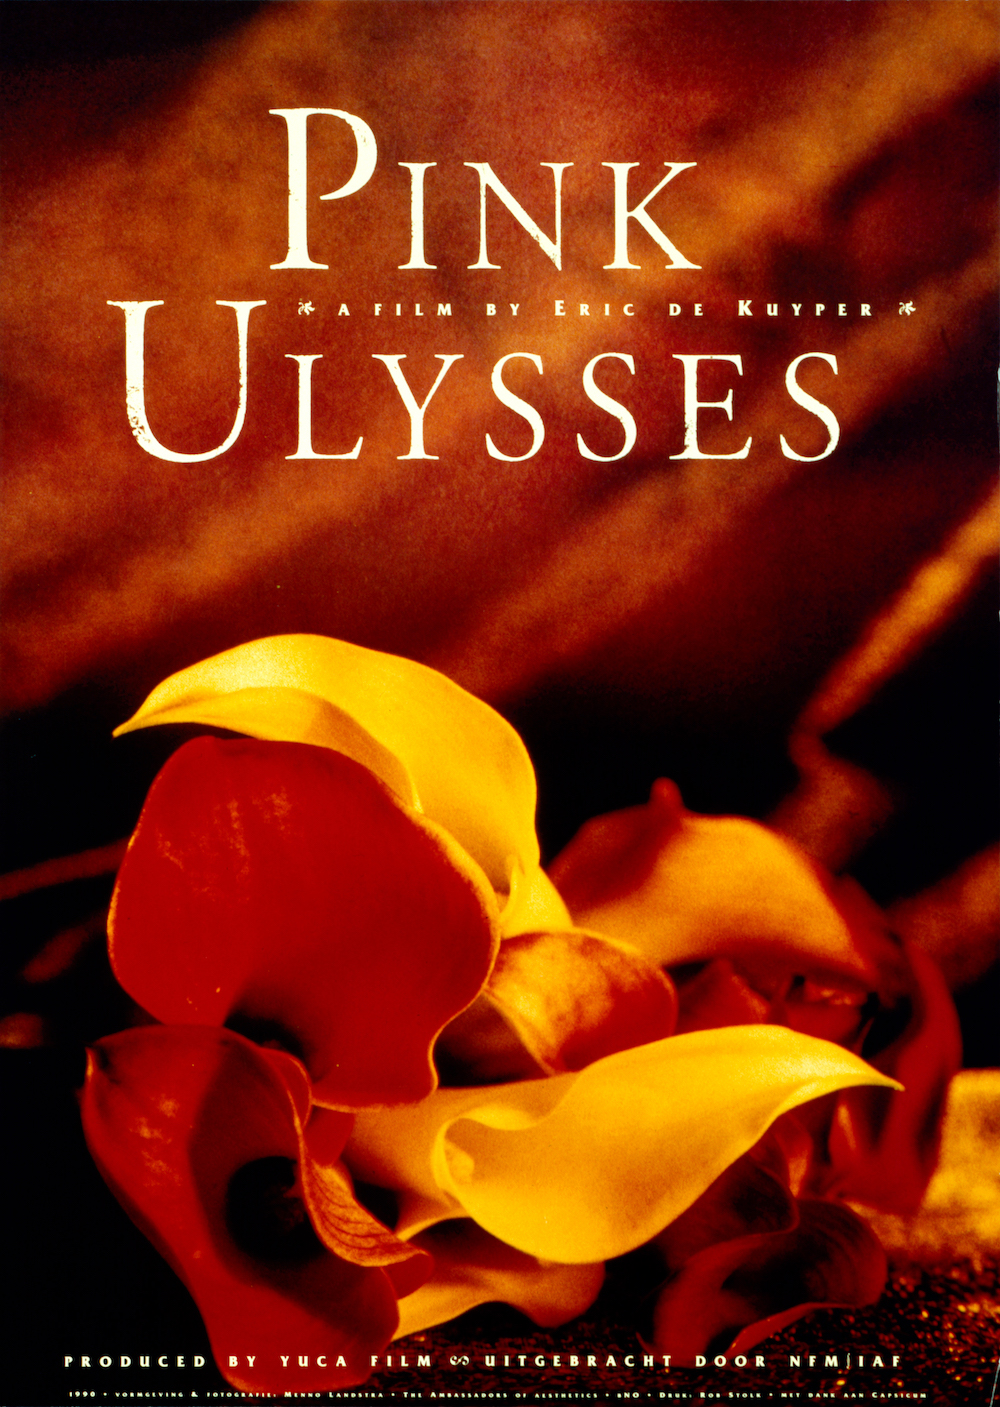 Pink Ulysses (Eric de Kuyper, 1990)